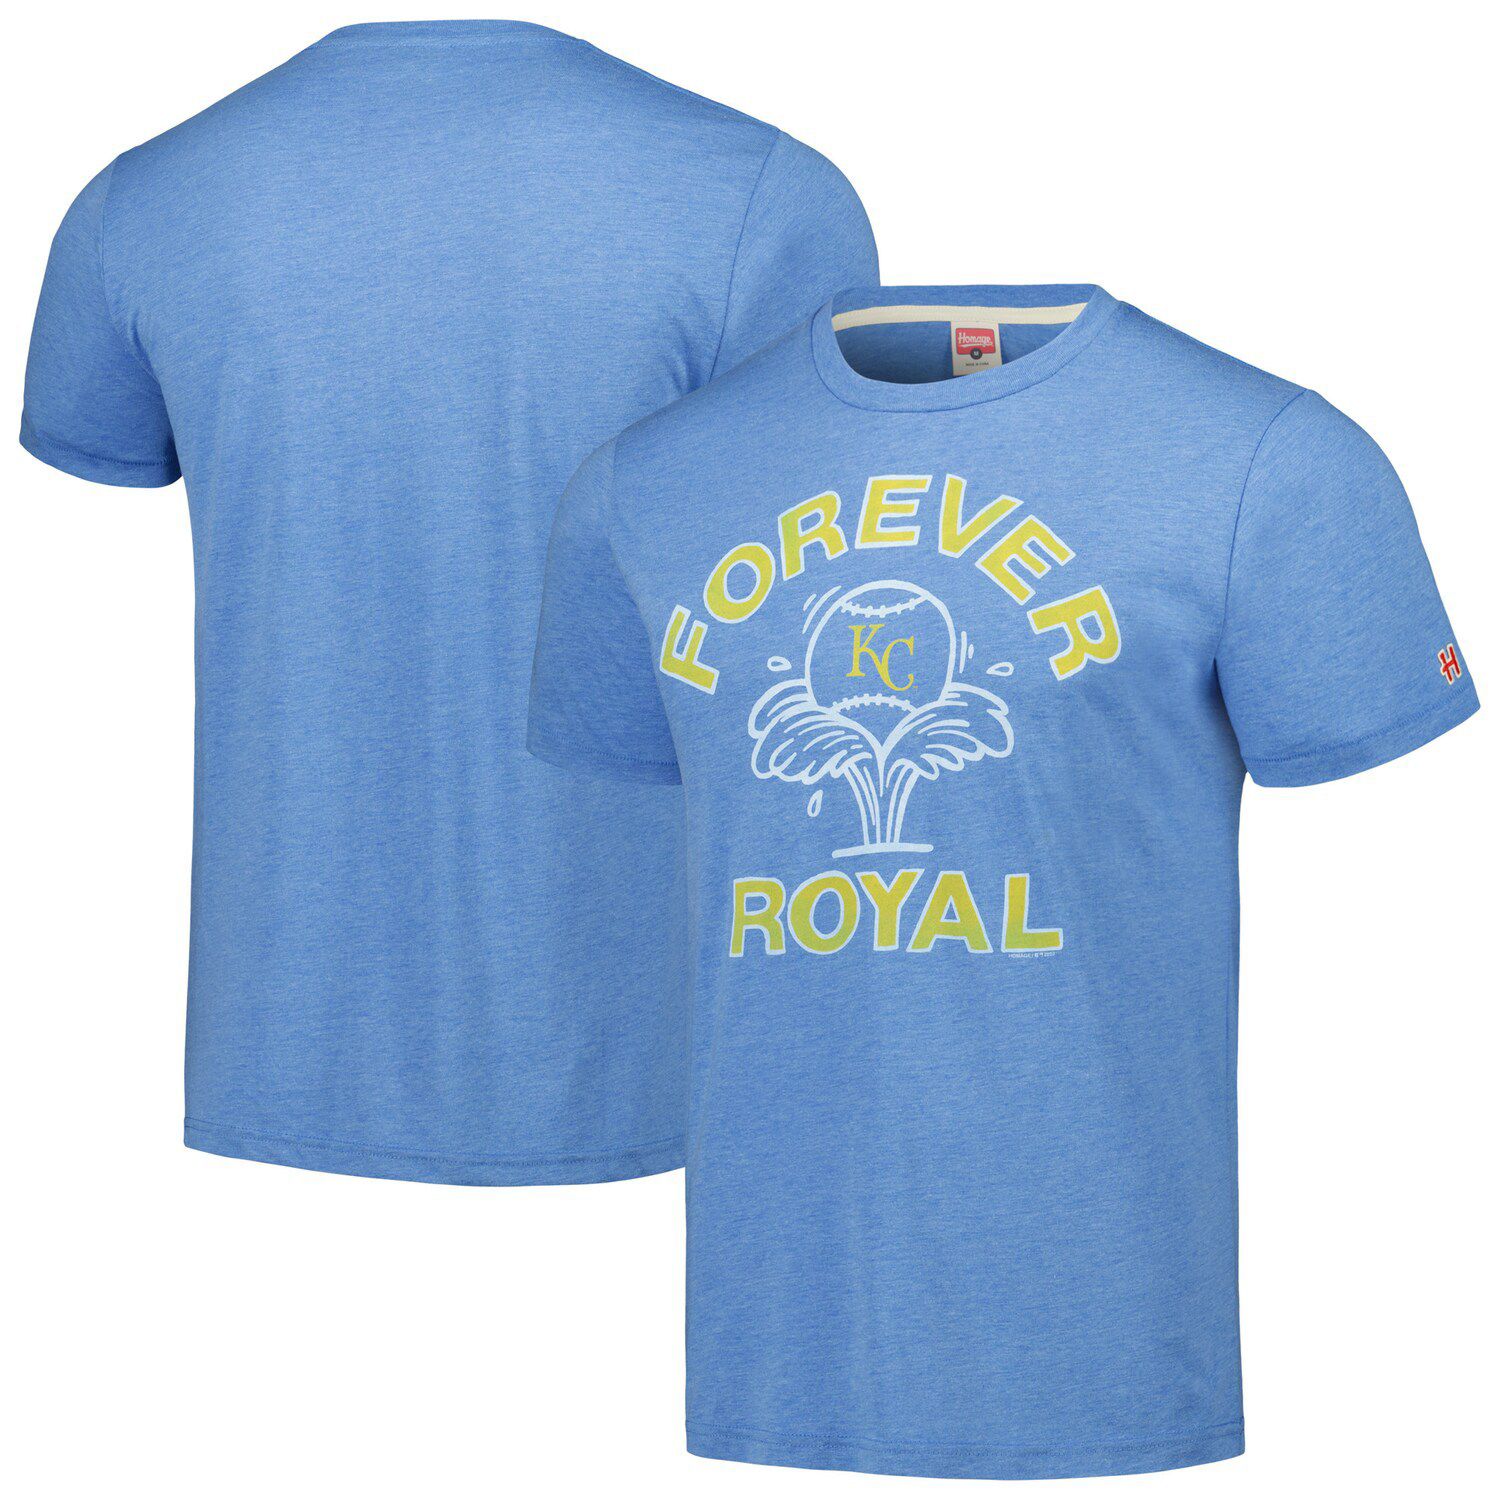 Women's Nike Light Blue/Heathered Royal Kansas City Royals Cooperstown Collection Rewind Raglan T-Shirt Size: Medium